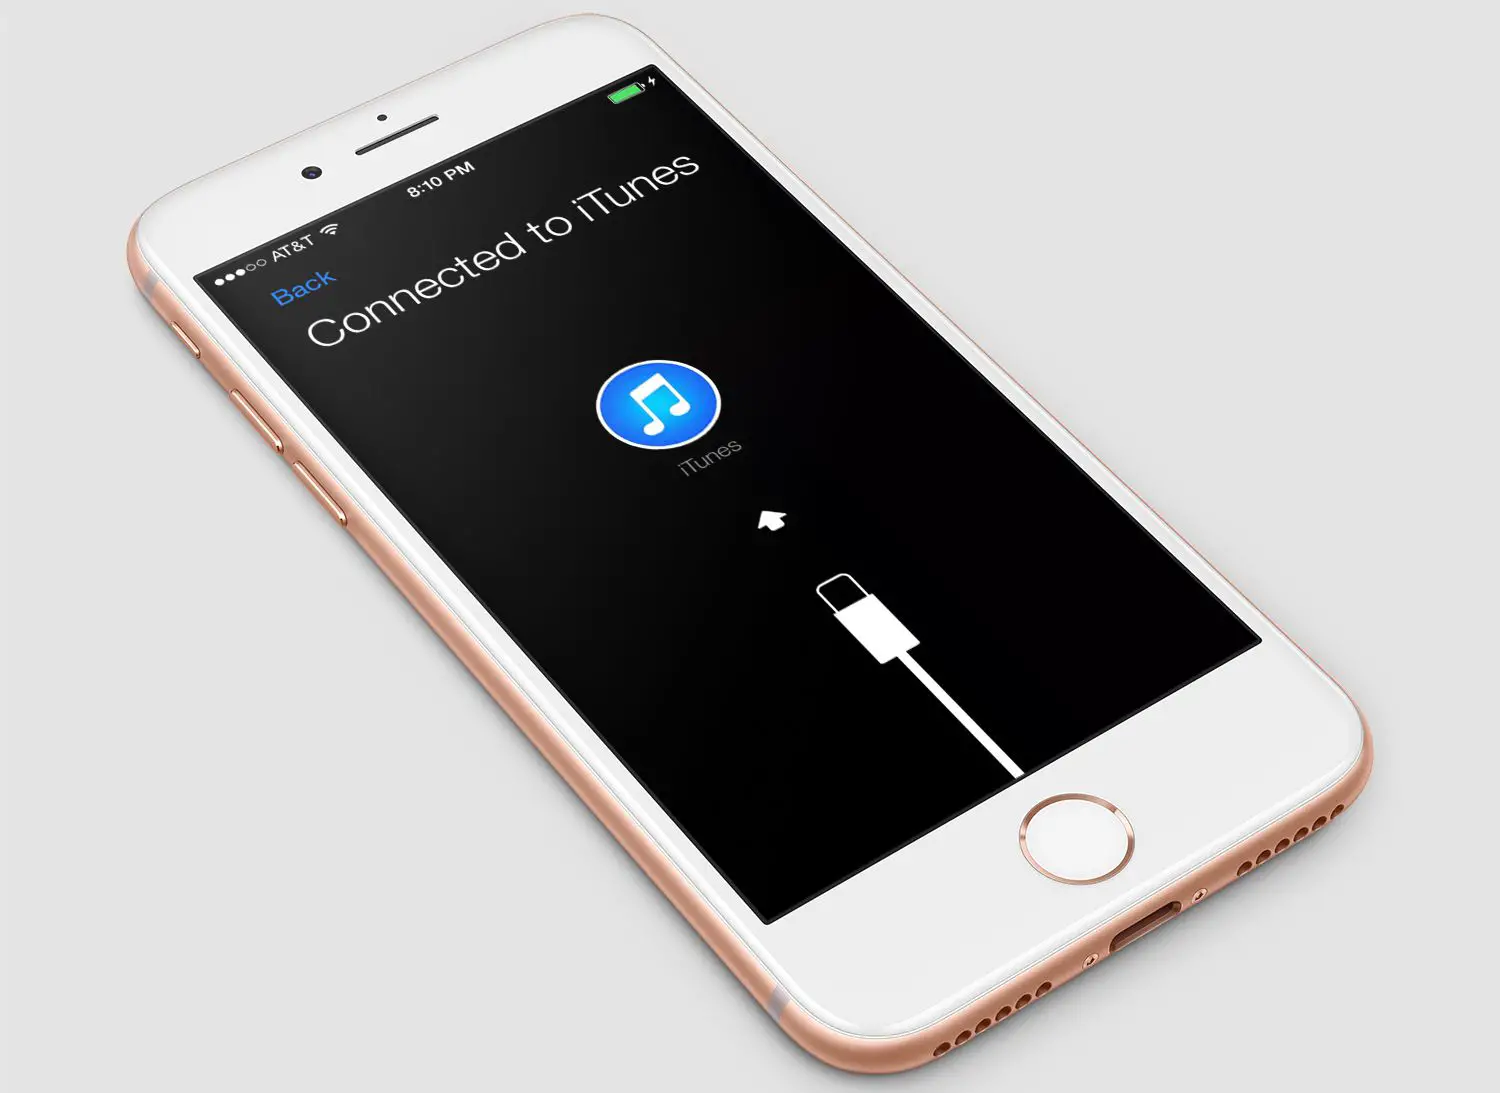 iPhone com tela conectada ao iTunes ativada